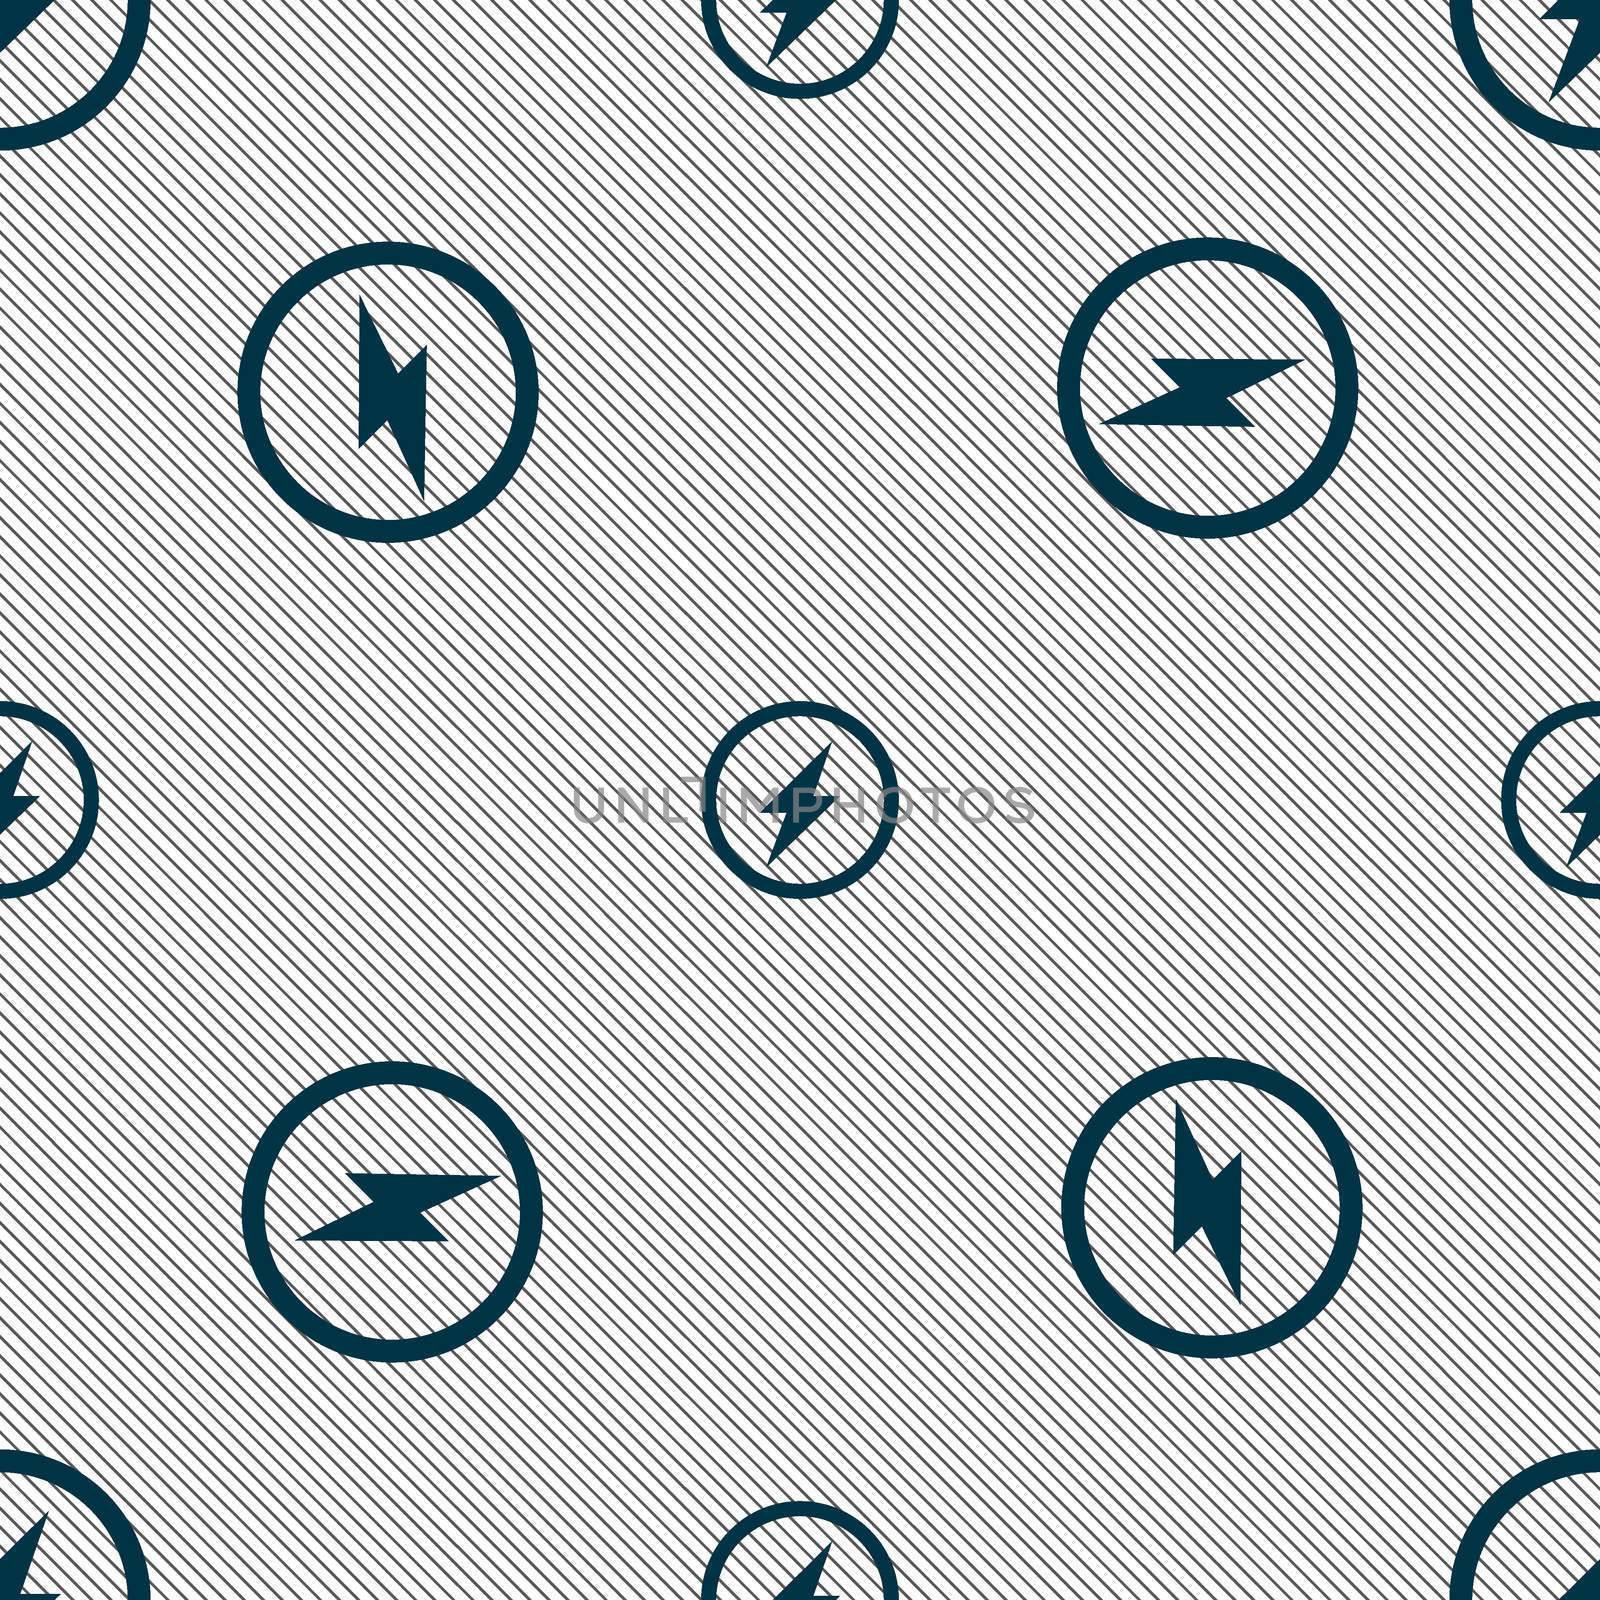 Photo flash sign icon. Lightning symbol. Seamless pattern with geometric texture.  by serhii_lohvyniuk